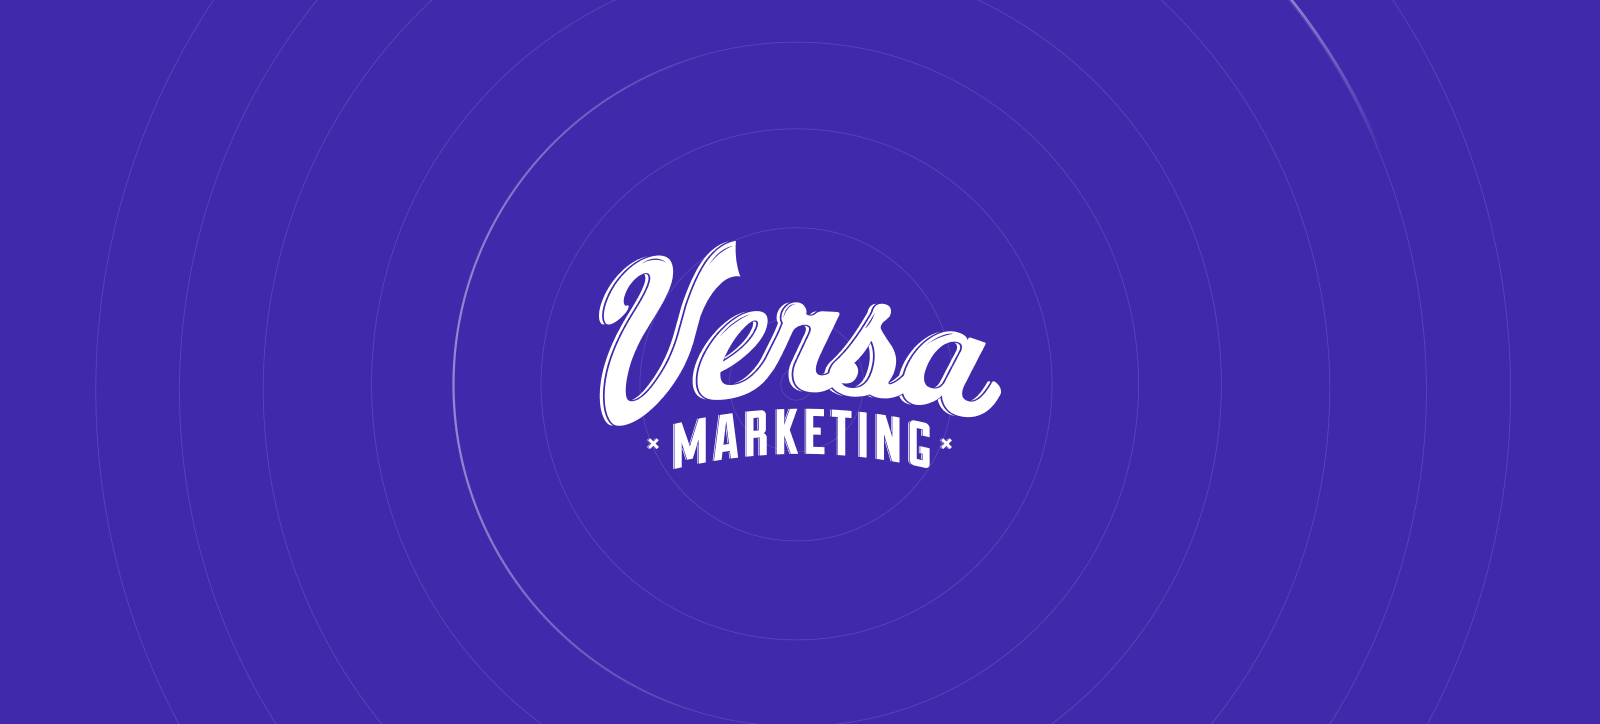 versa marketimg logo